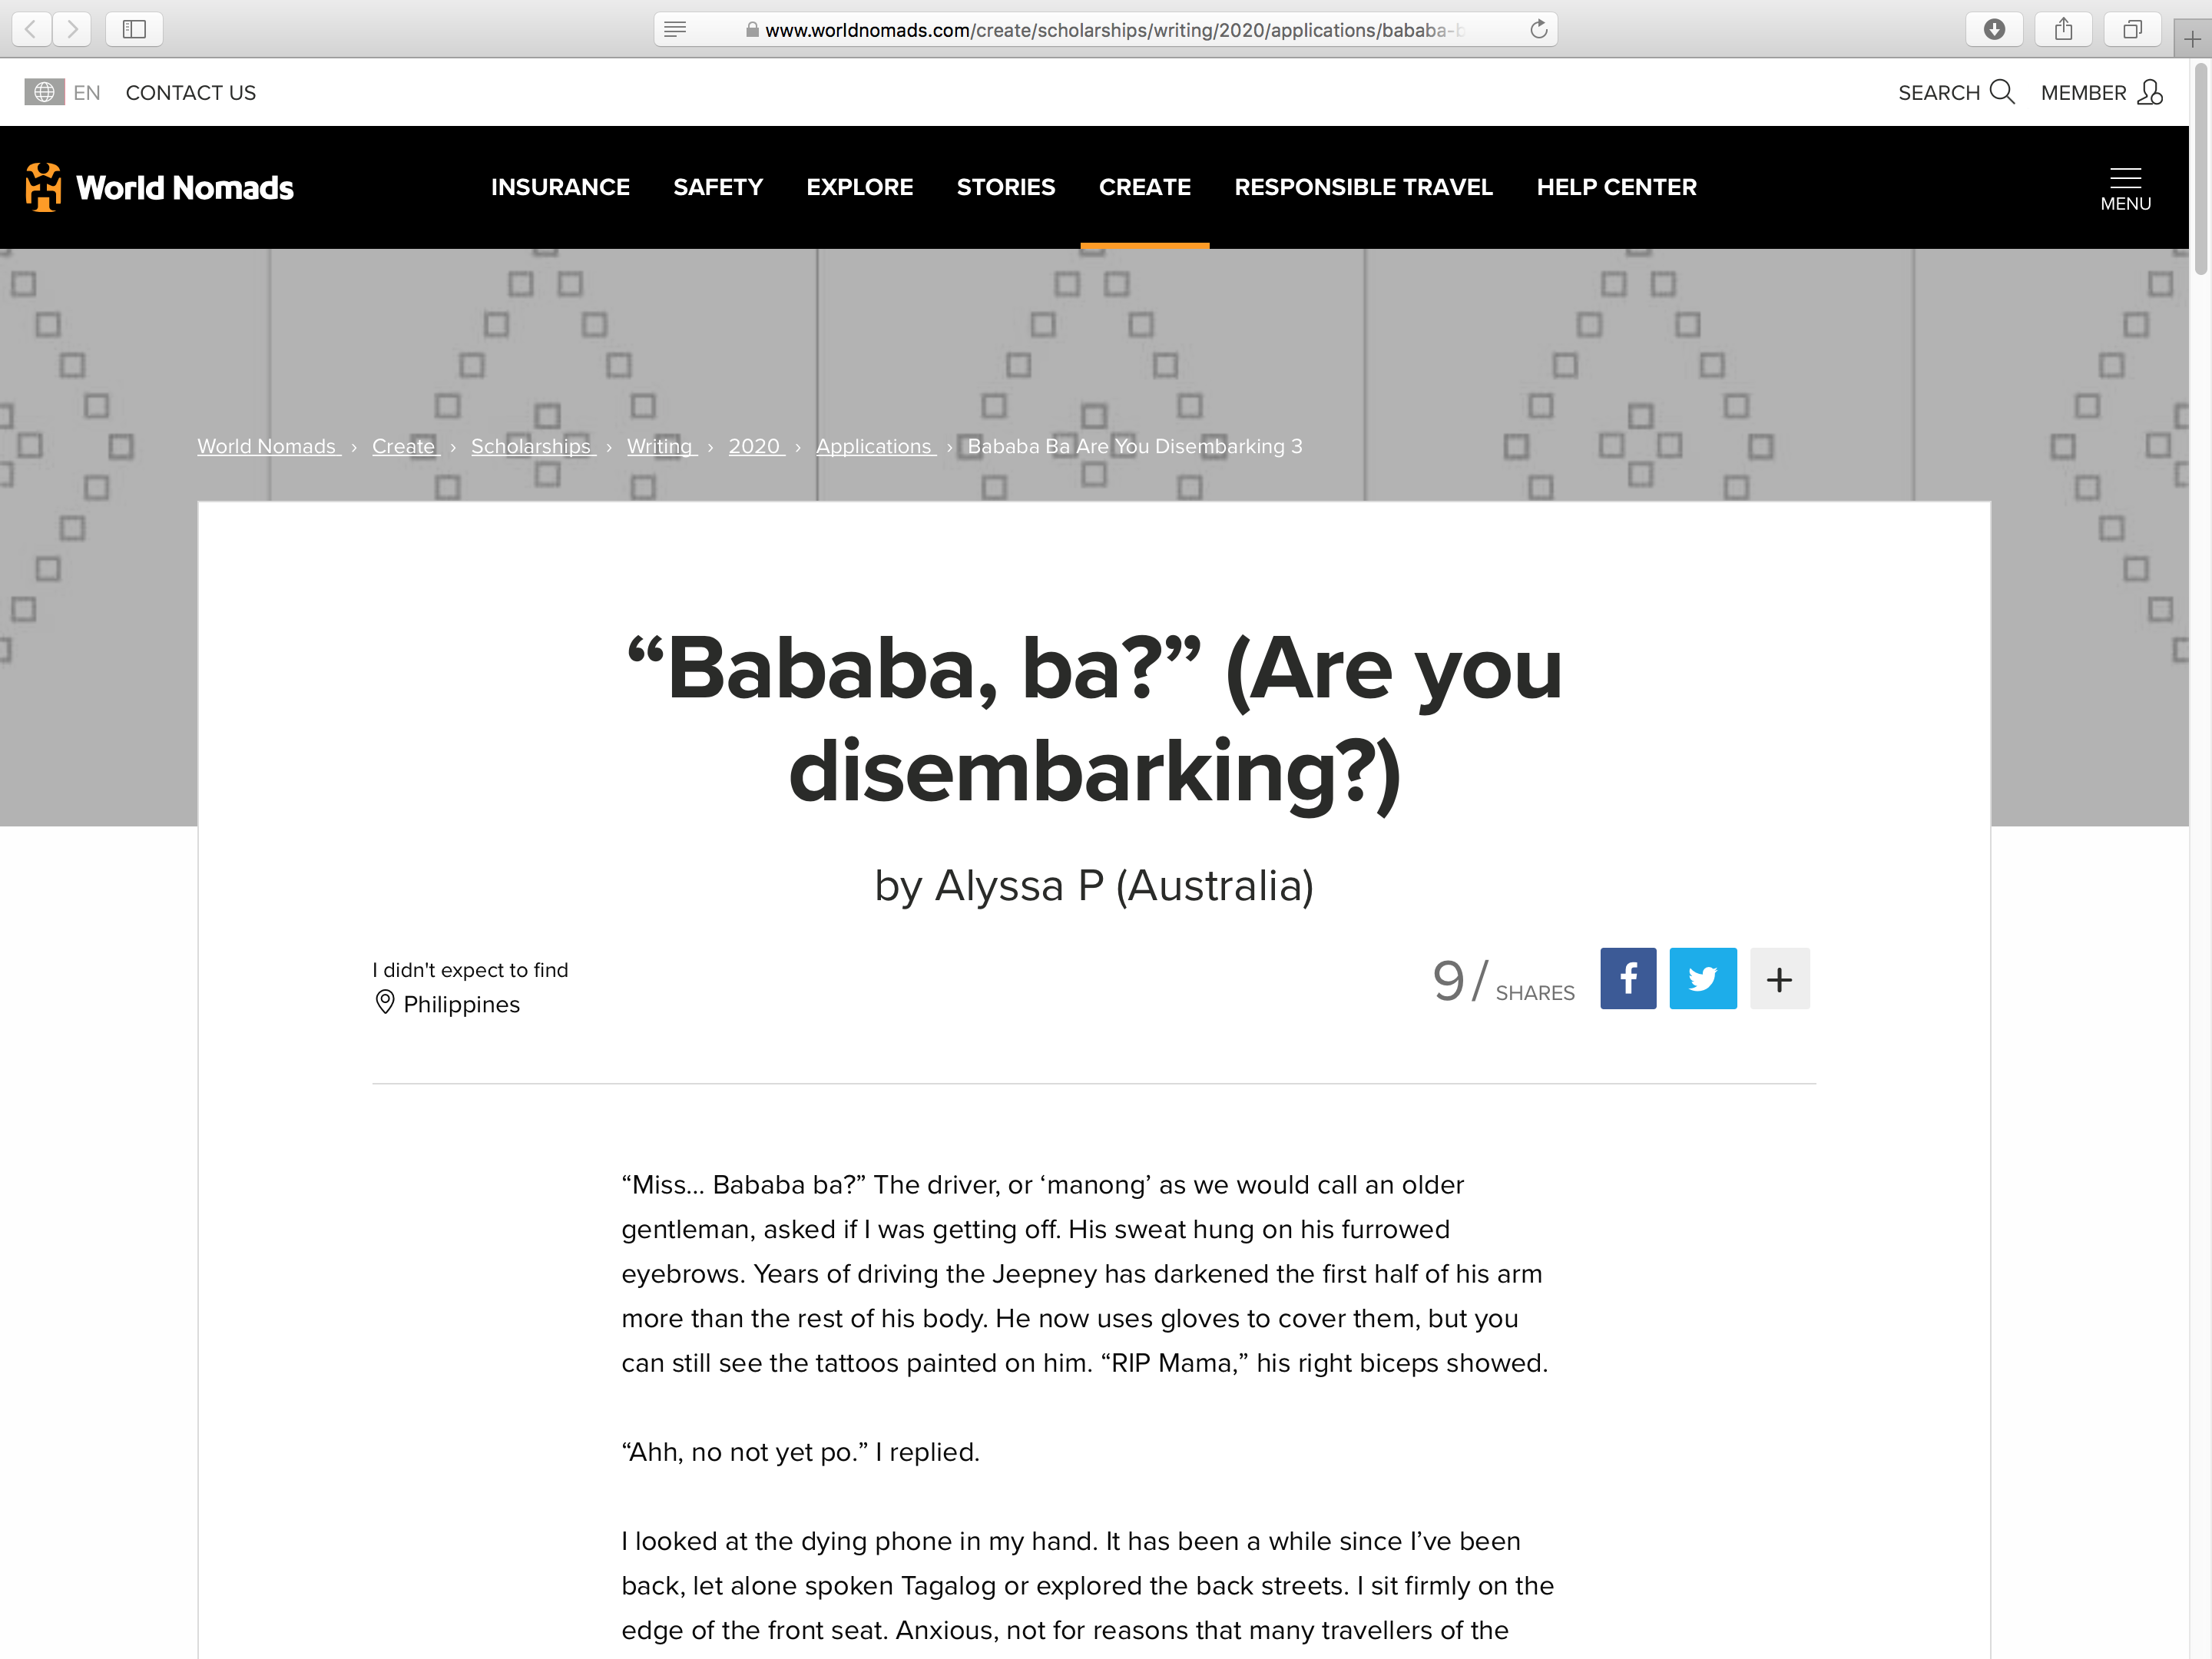 “Bababa, ba?” (Are you disembarking?)